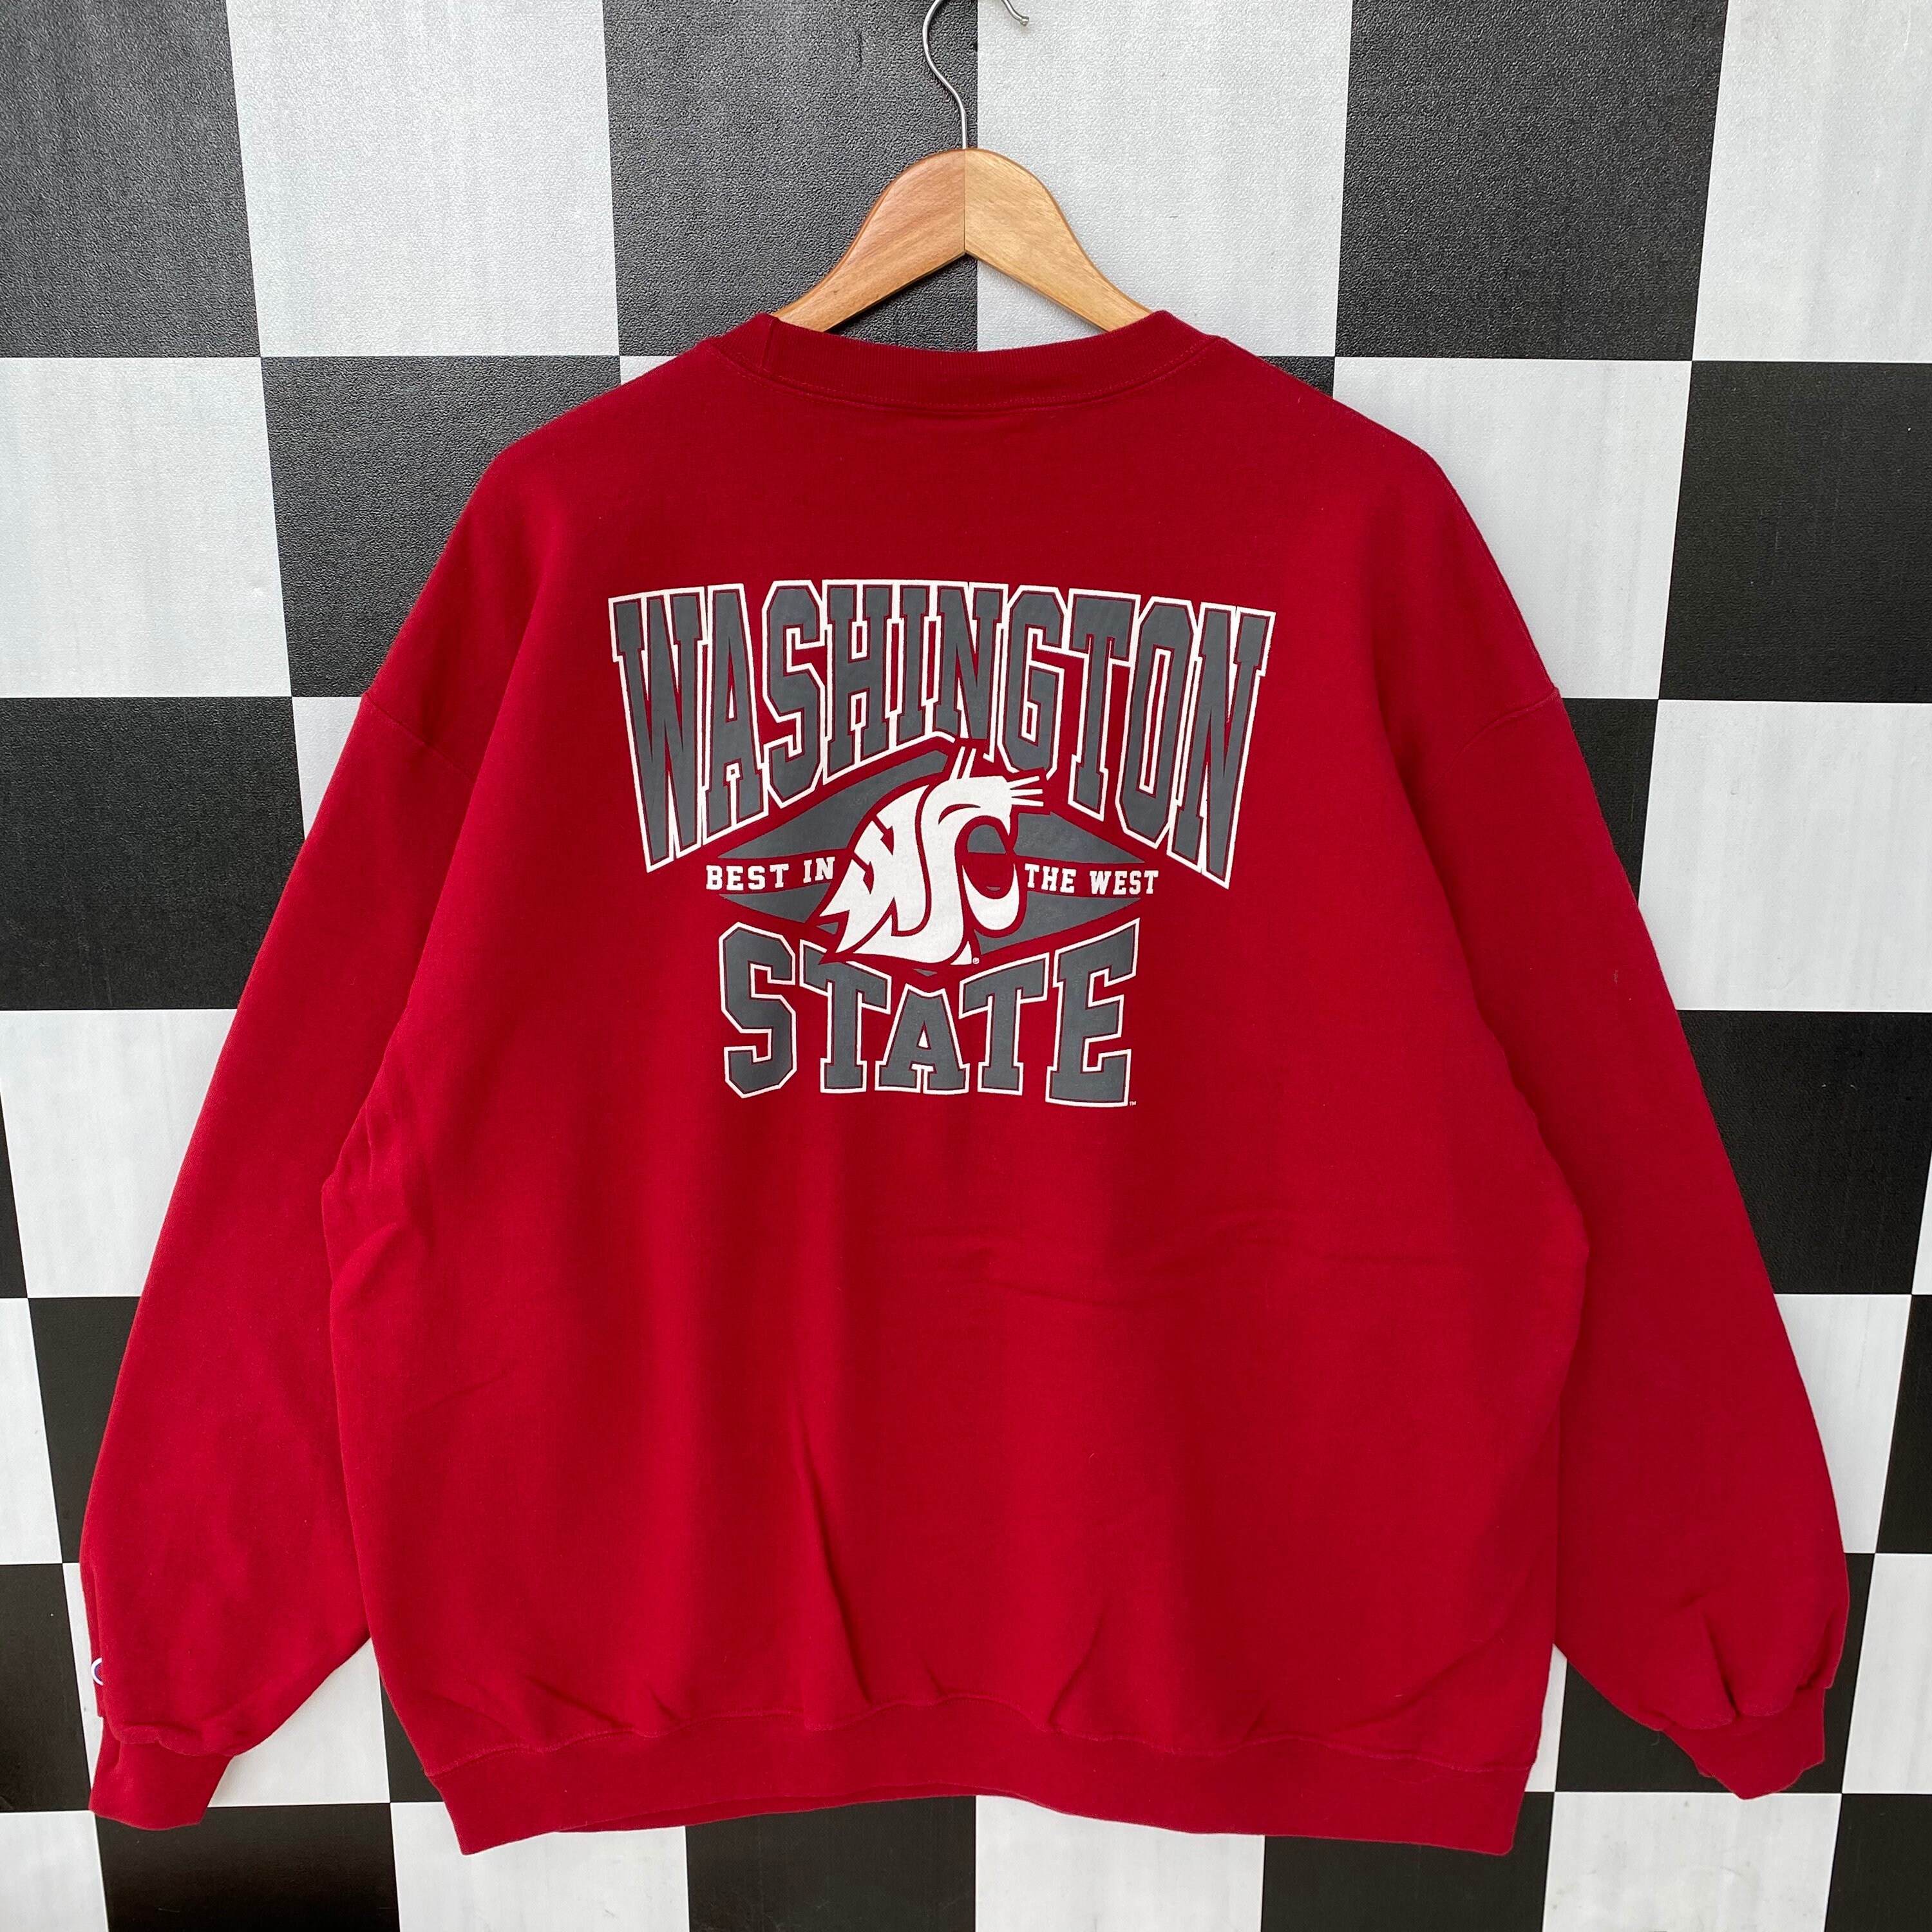 Vintage 90s Champion Washington State Sweatshirt Jumper | Etsy